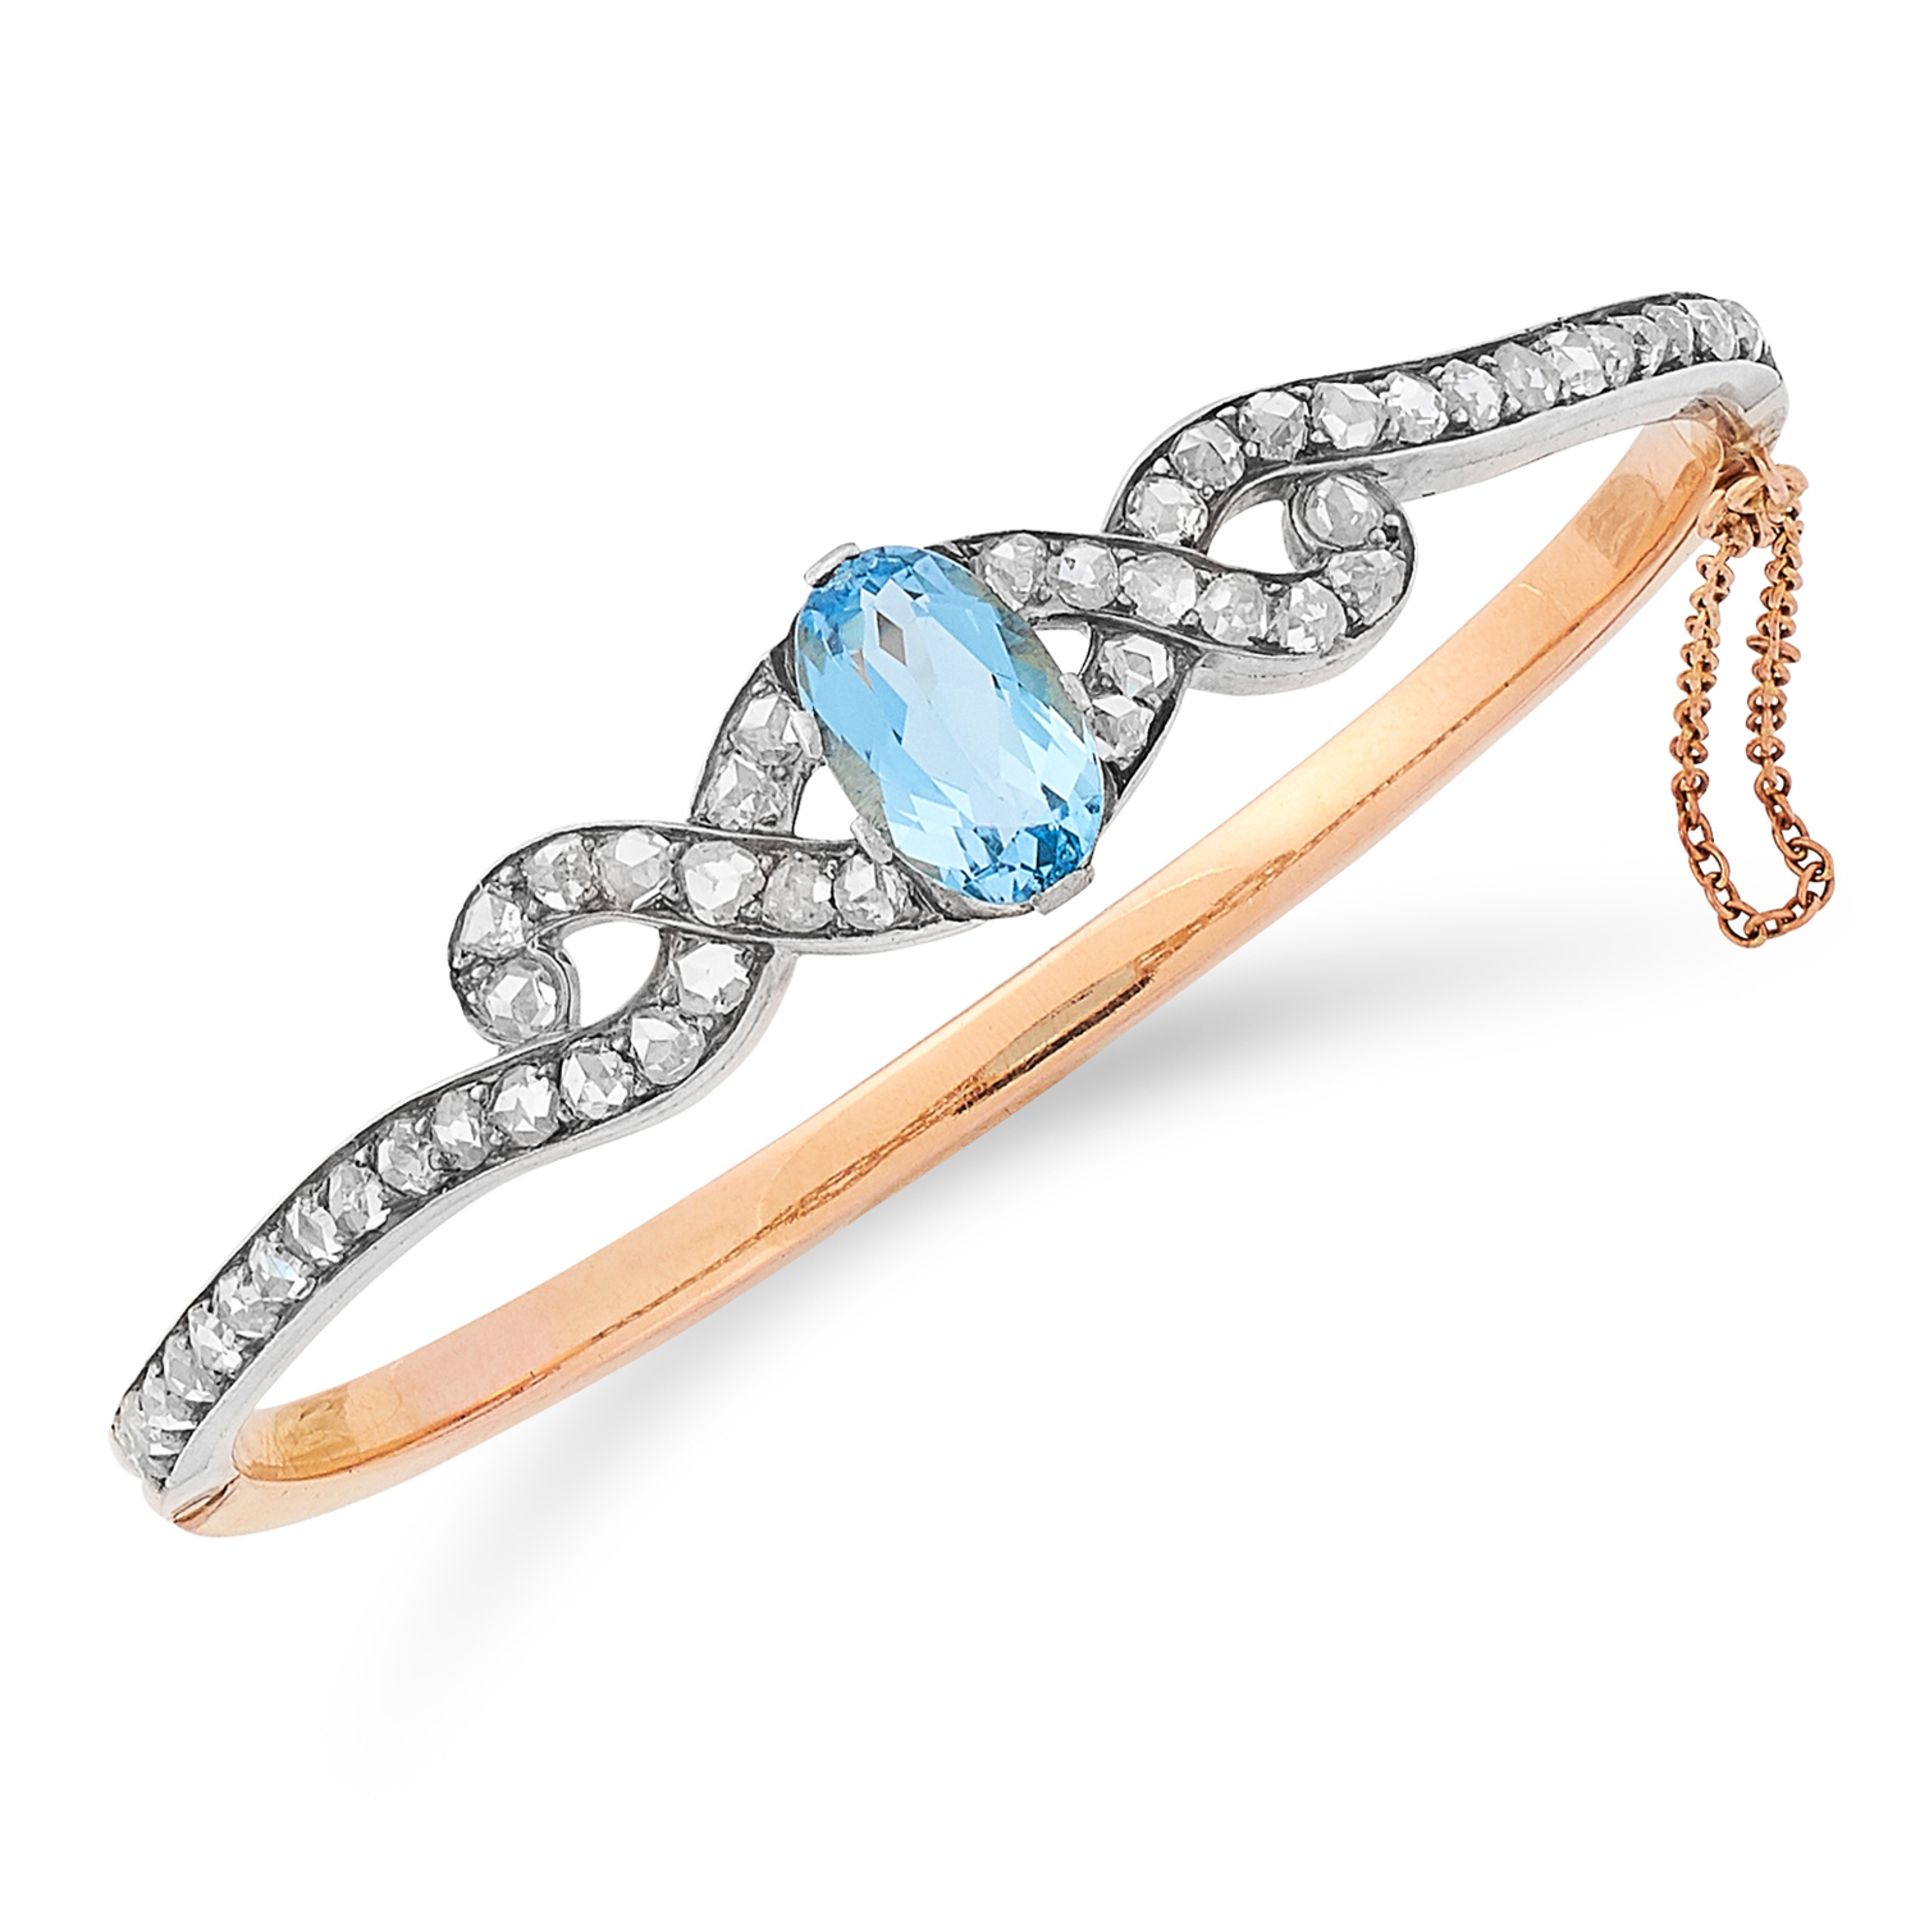 ANTIQUE AQUAMARINE AND DIAMOND BANGLE set with an oval cut aquamarine and rose cut diamonds, 6cm